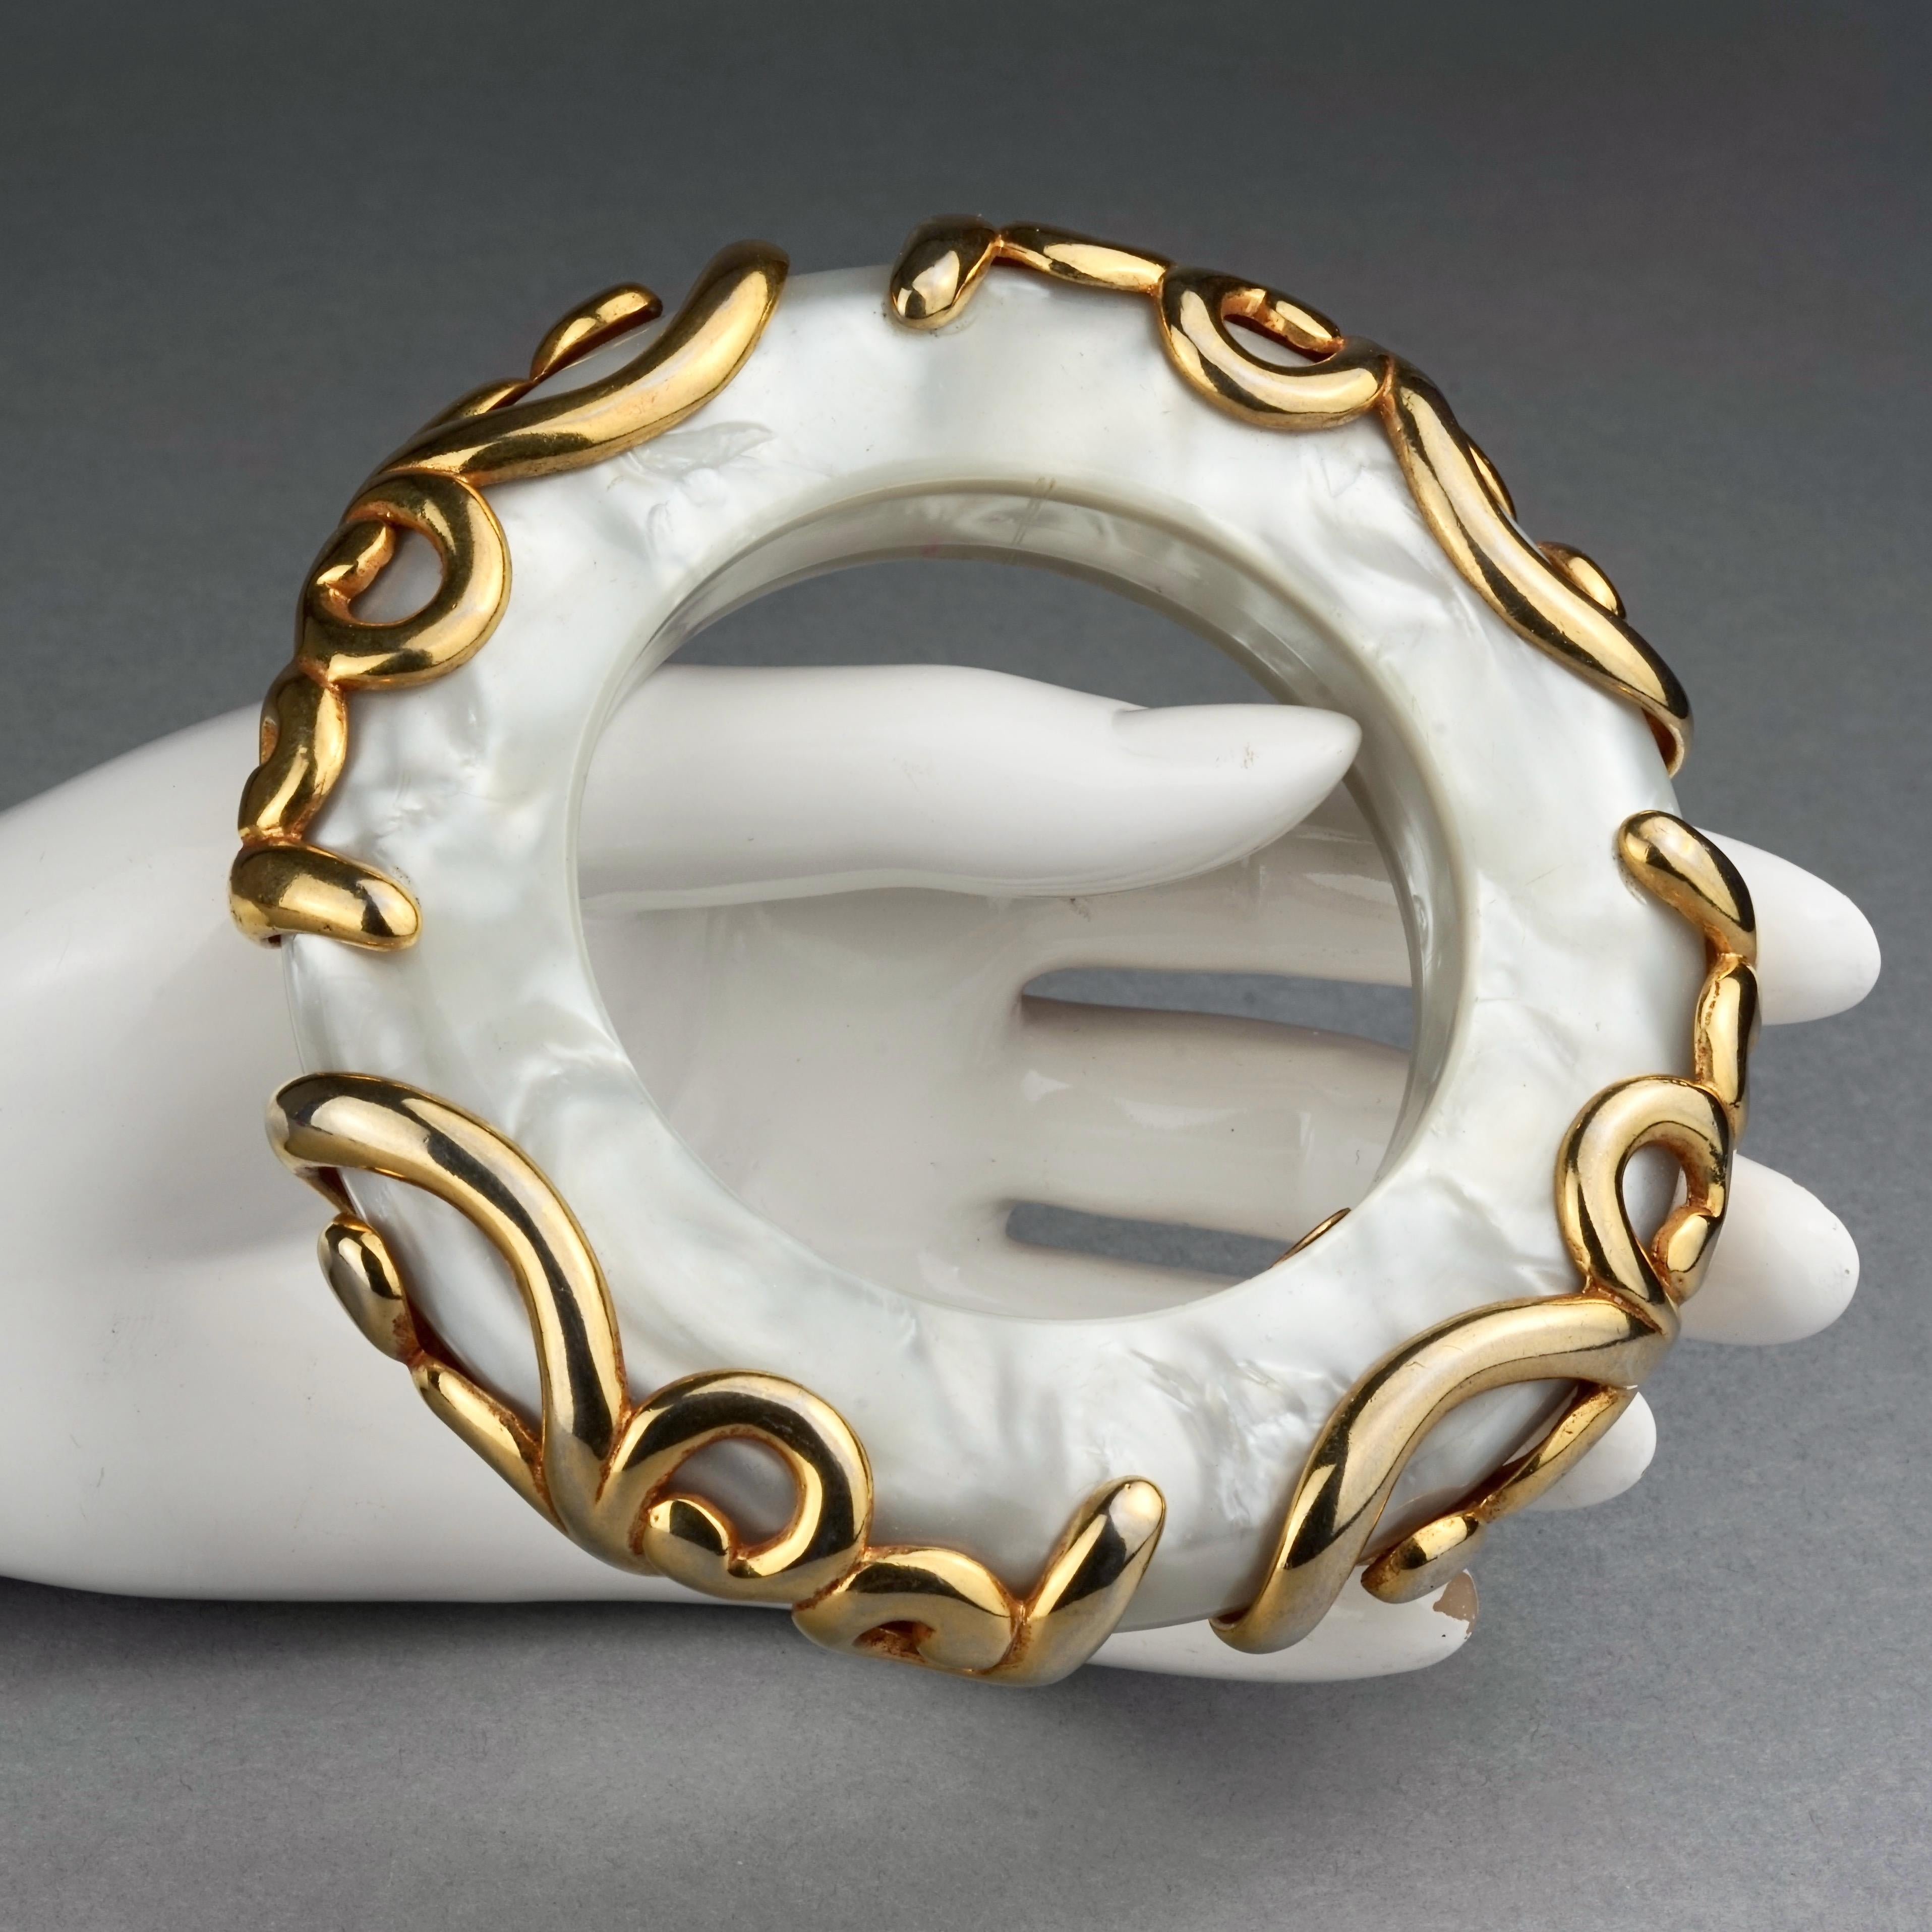 Vintage DOMINIQUE AURIENTIS Gilt Swirl Mother of Pearl Resin Bangle Bracelet For Sale 3